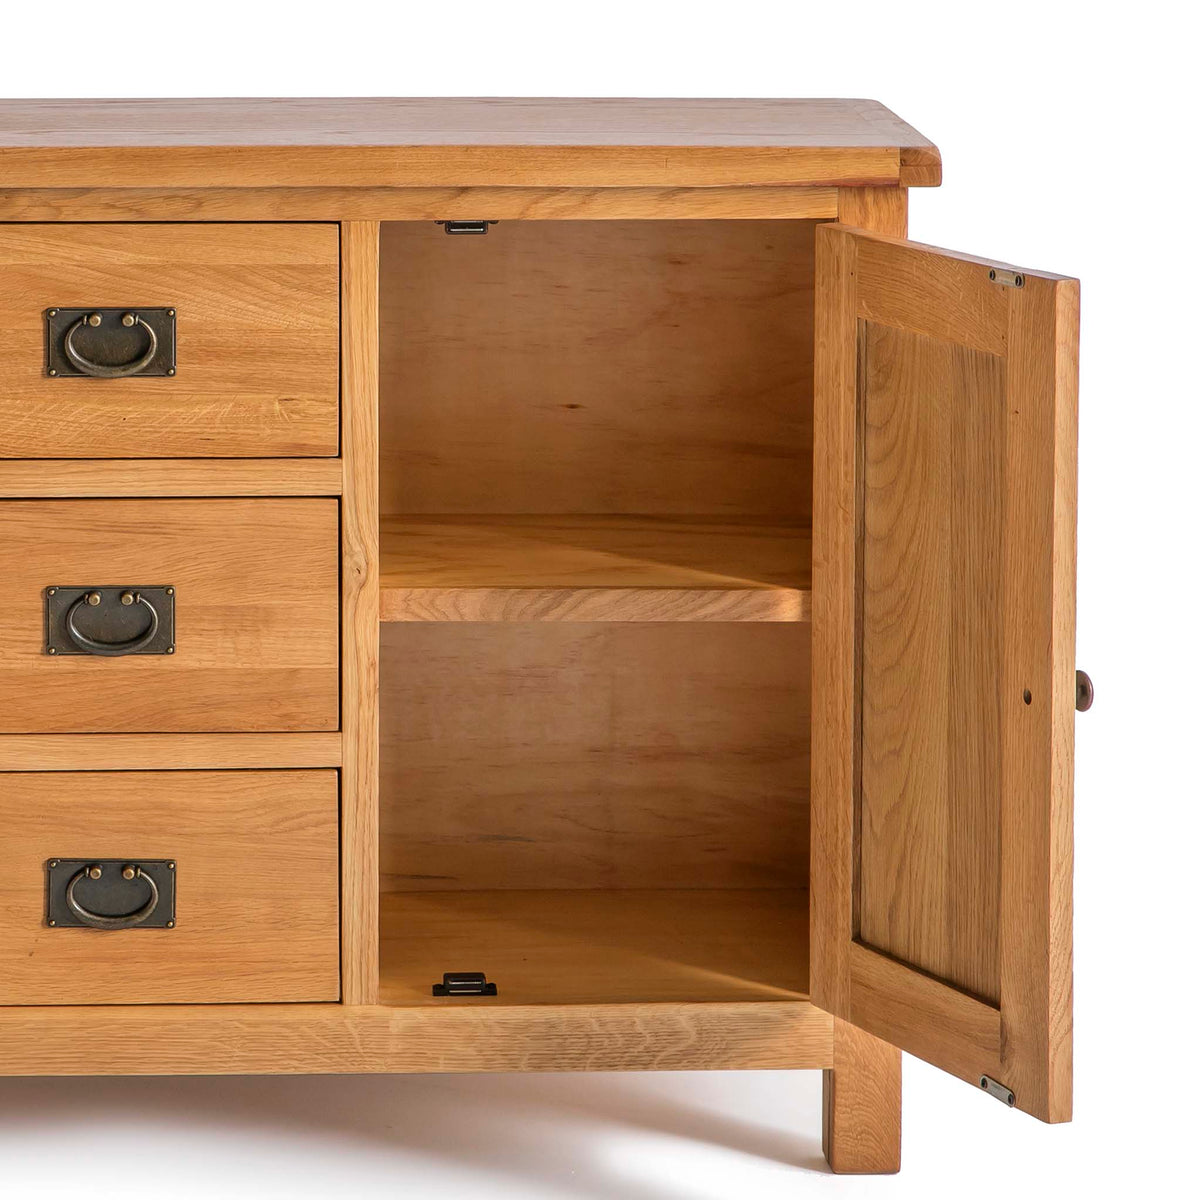 internal cupboard view of the Surrey Oak 3 Drawer Sideboard by Roseland Furniture